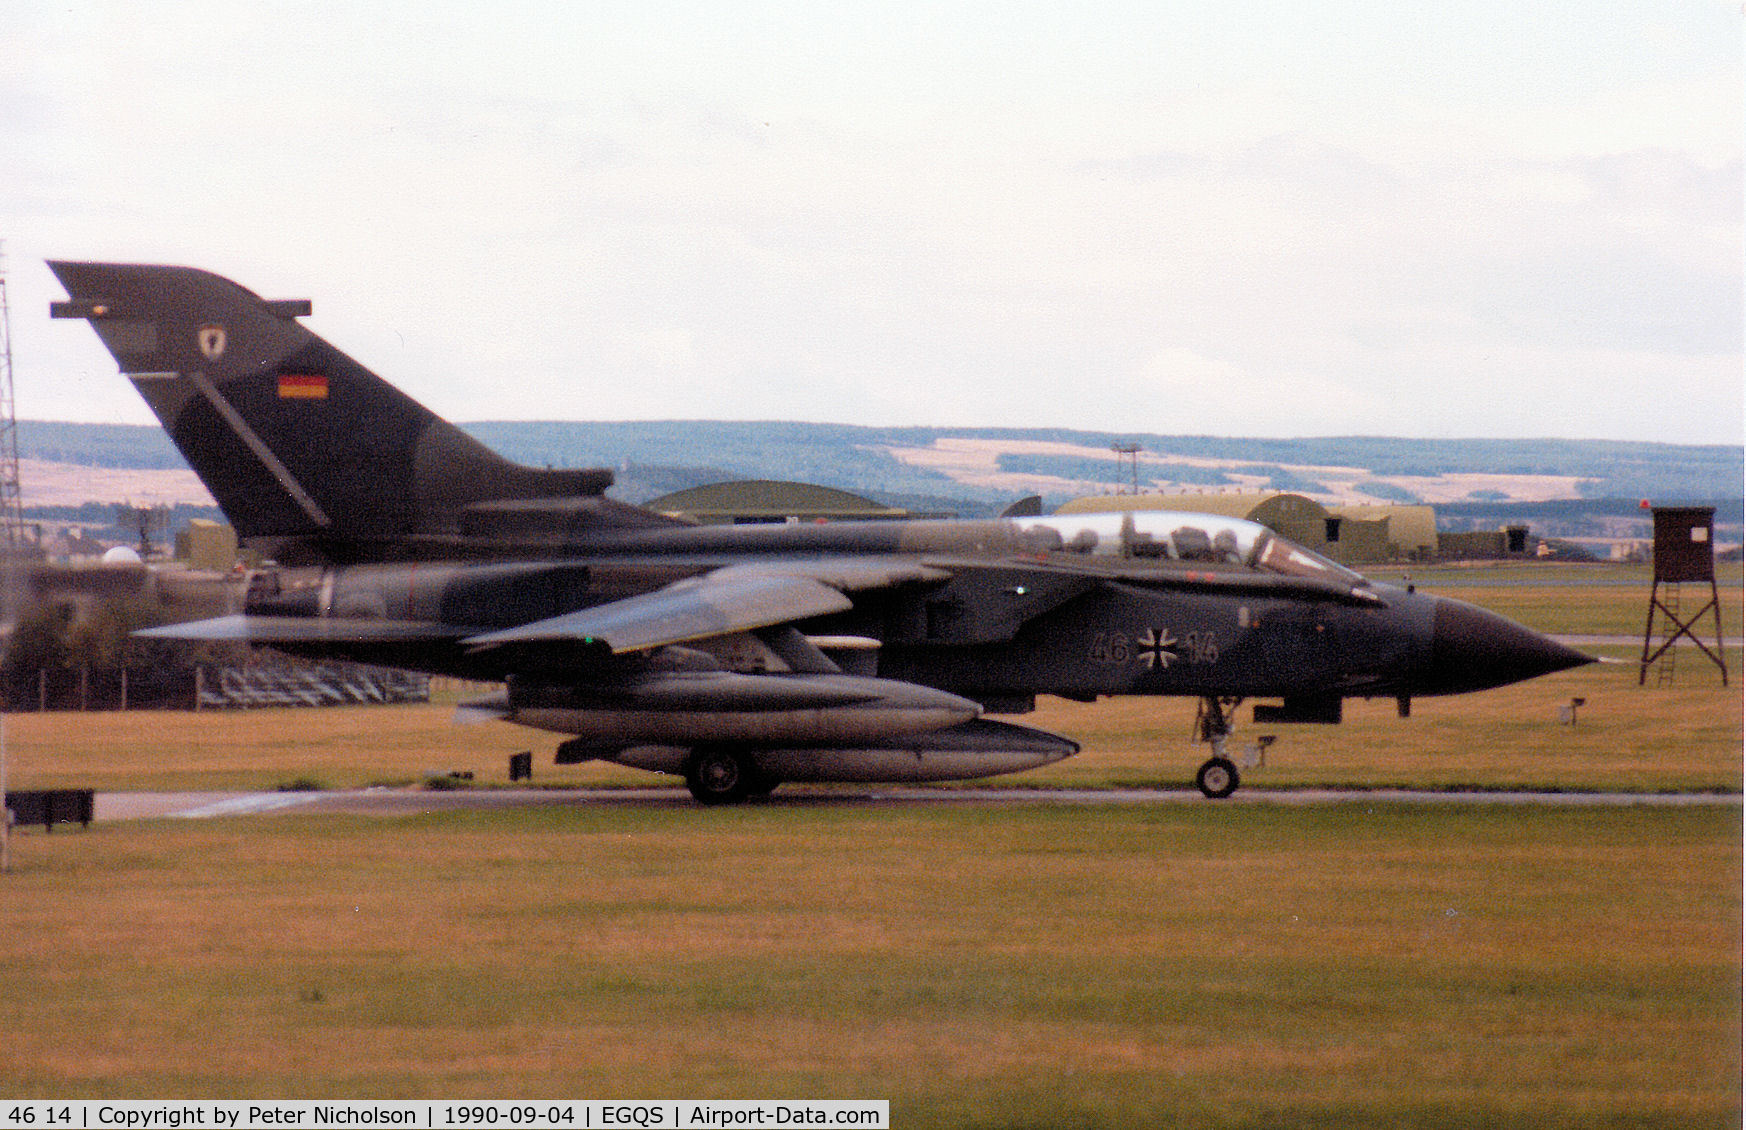 46 14, Panavia Tornado IDS C/N 776/GS247/4314, Tornado IDS of Marineflieger MFG-1 preparing to join the active runway at RAF Lossiemouth in September 1990.